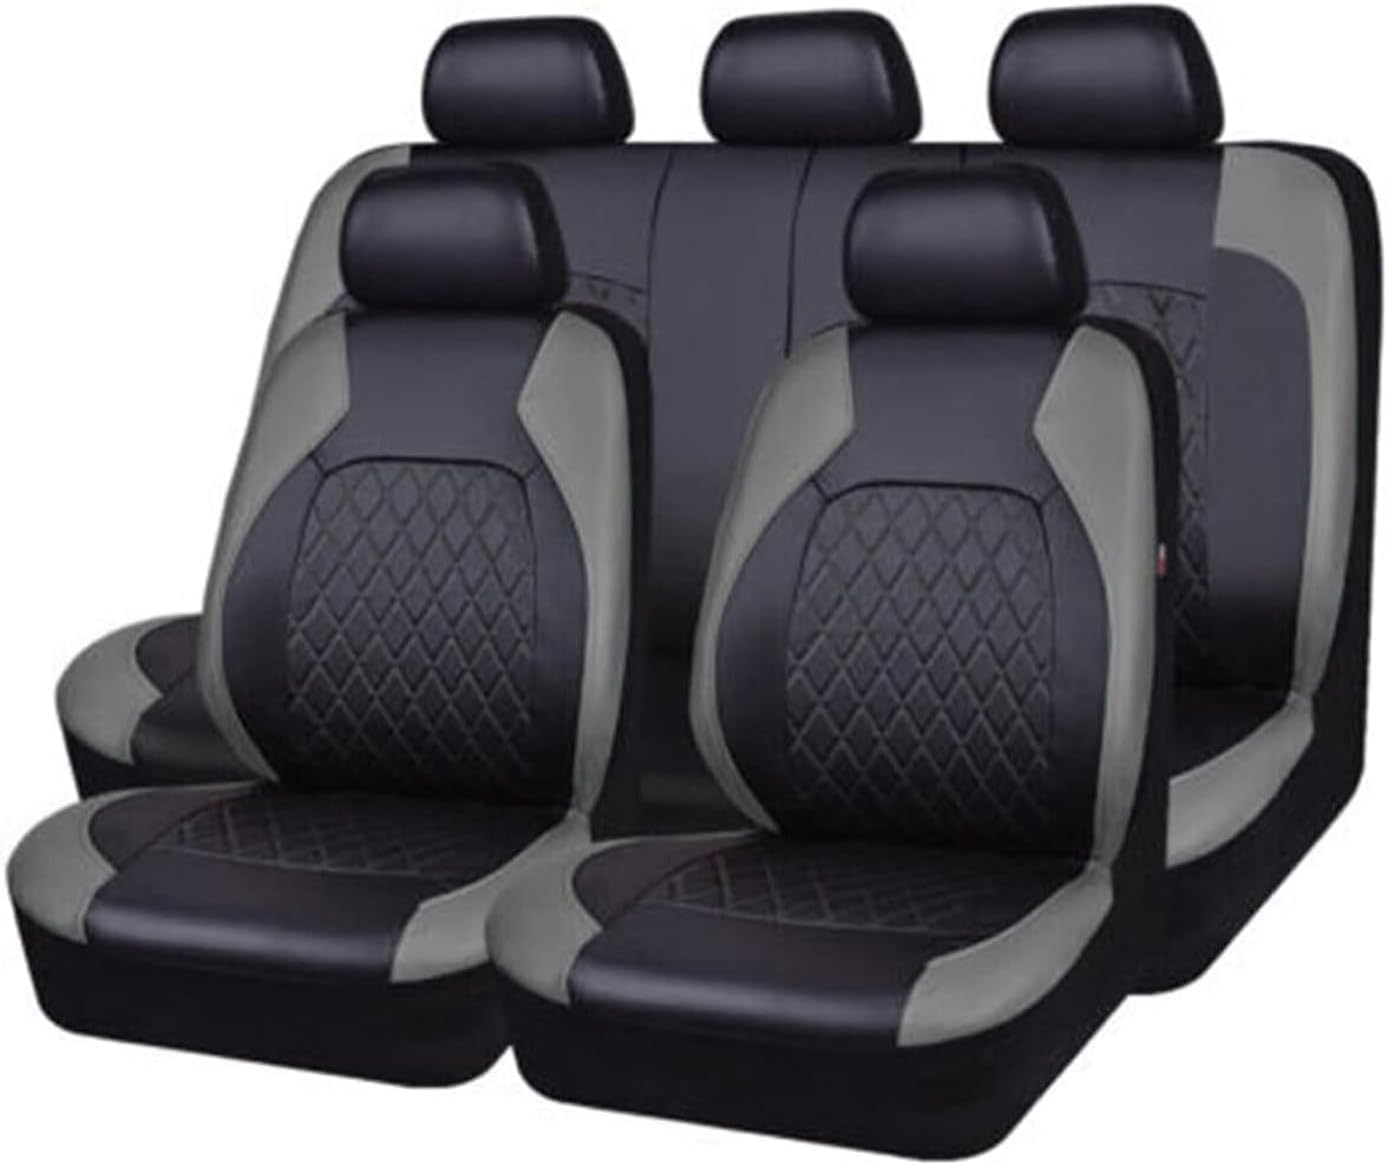 Auto Leder Sitzbezüge für Audi A6 C5 4B Avant A6 C6 4F Avant A6 C6 4F, 9 Stück Allwetter rutschfest Wasserdicht Atmungsaktiv Schonbezug Set Sitzkissenschutz,B/Grey von SARCX